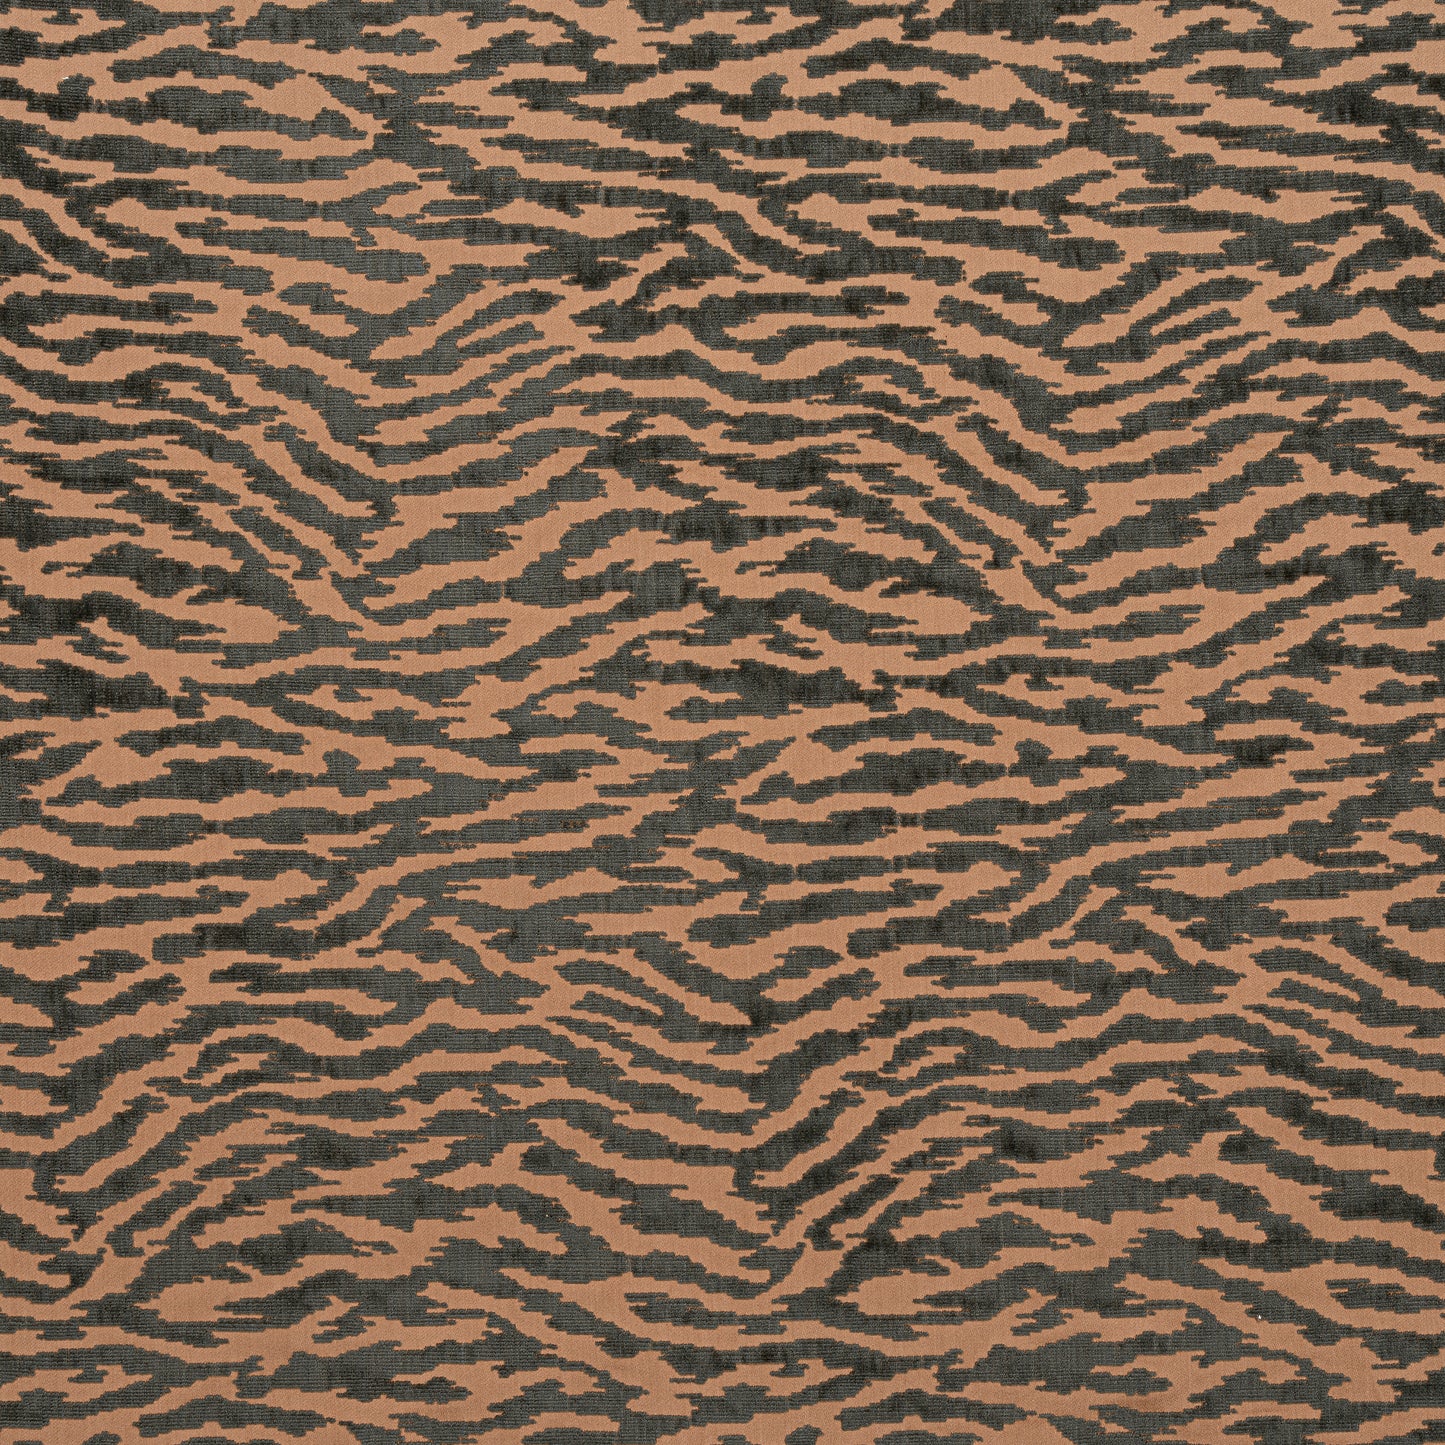 Purchase  Ann French Fabric Item# AW24524  pattern name  Tadoba Velvet